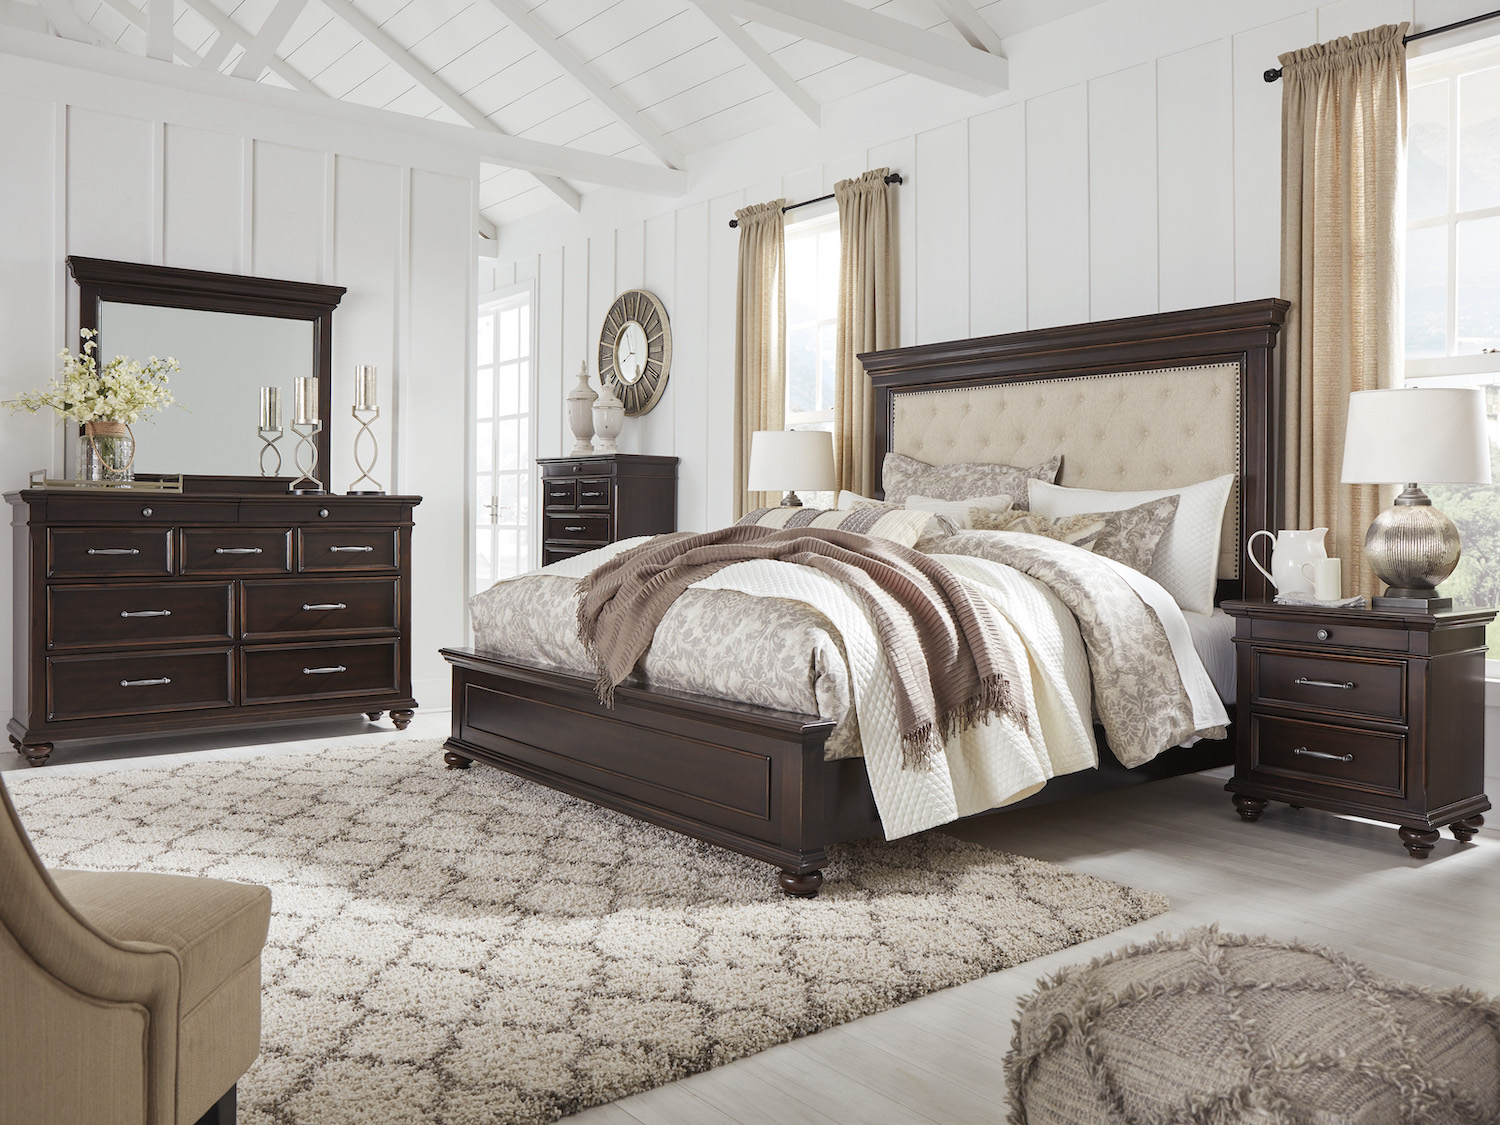 ashley bedroom furniture quality